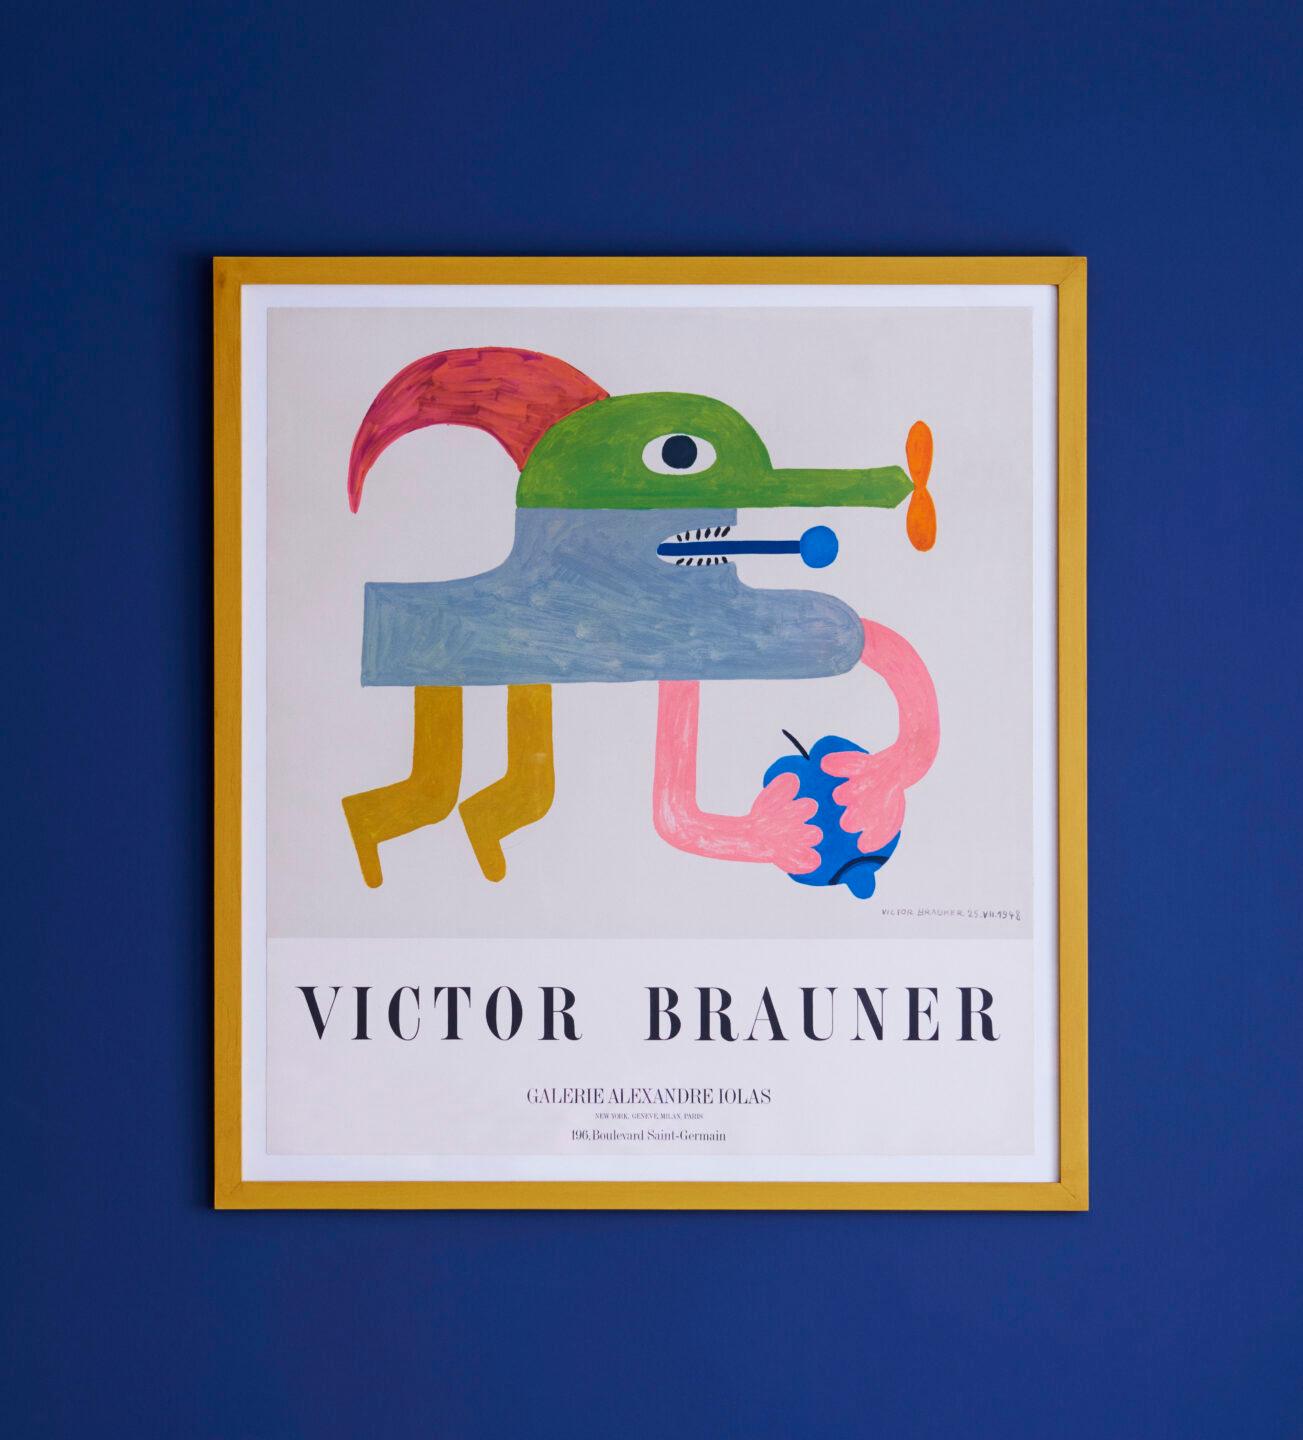 Victor Brauner
France, 1948

Vintage original limited edition exhibition poster from 